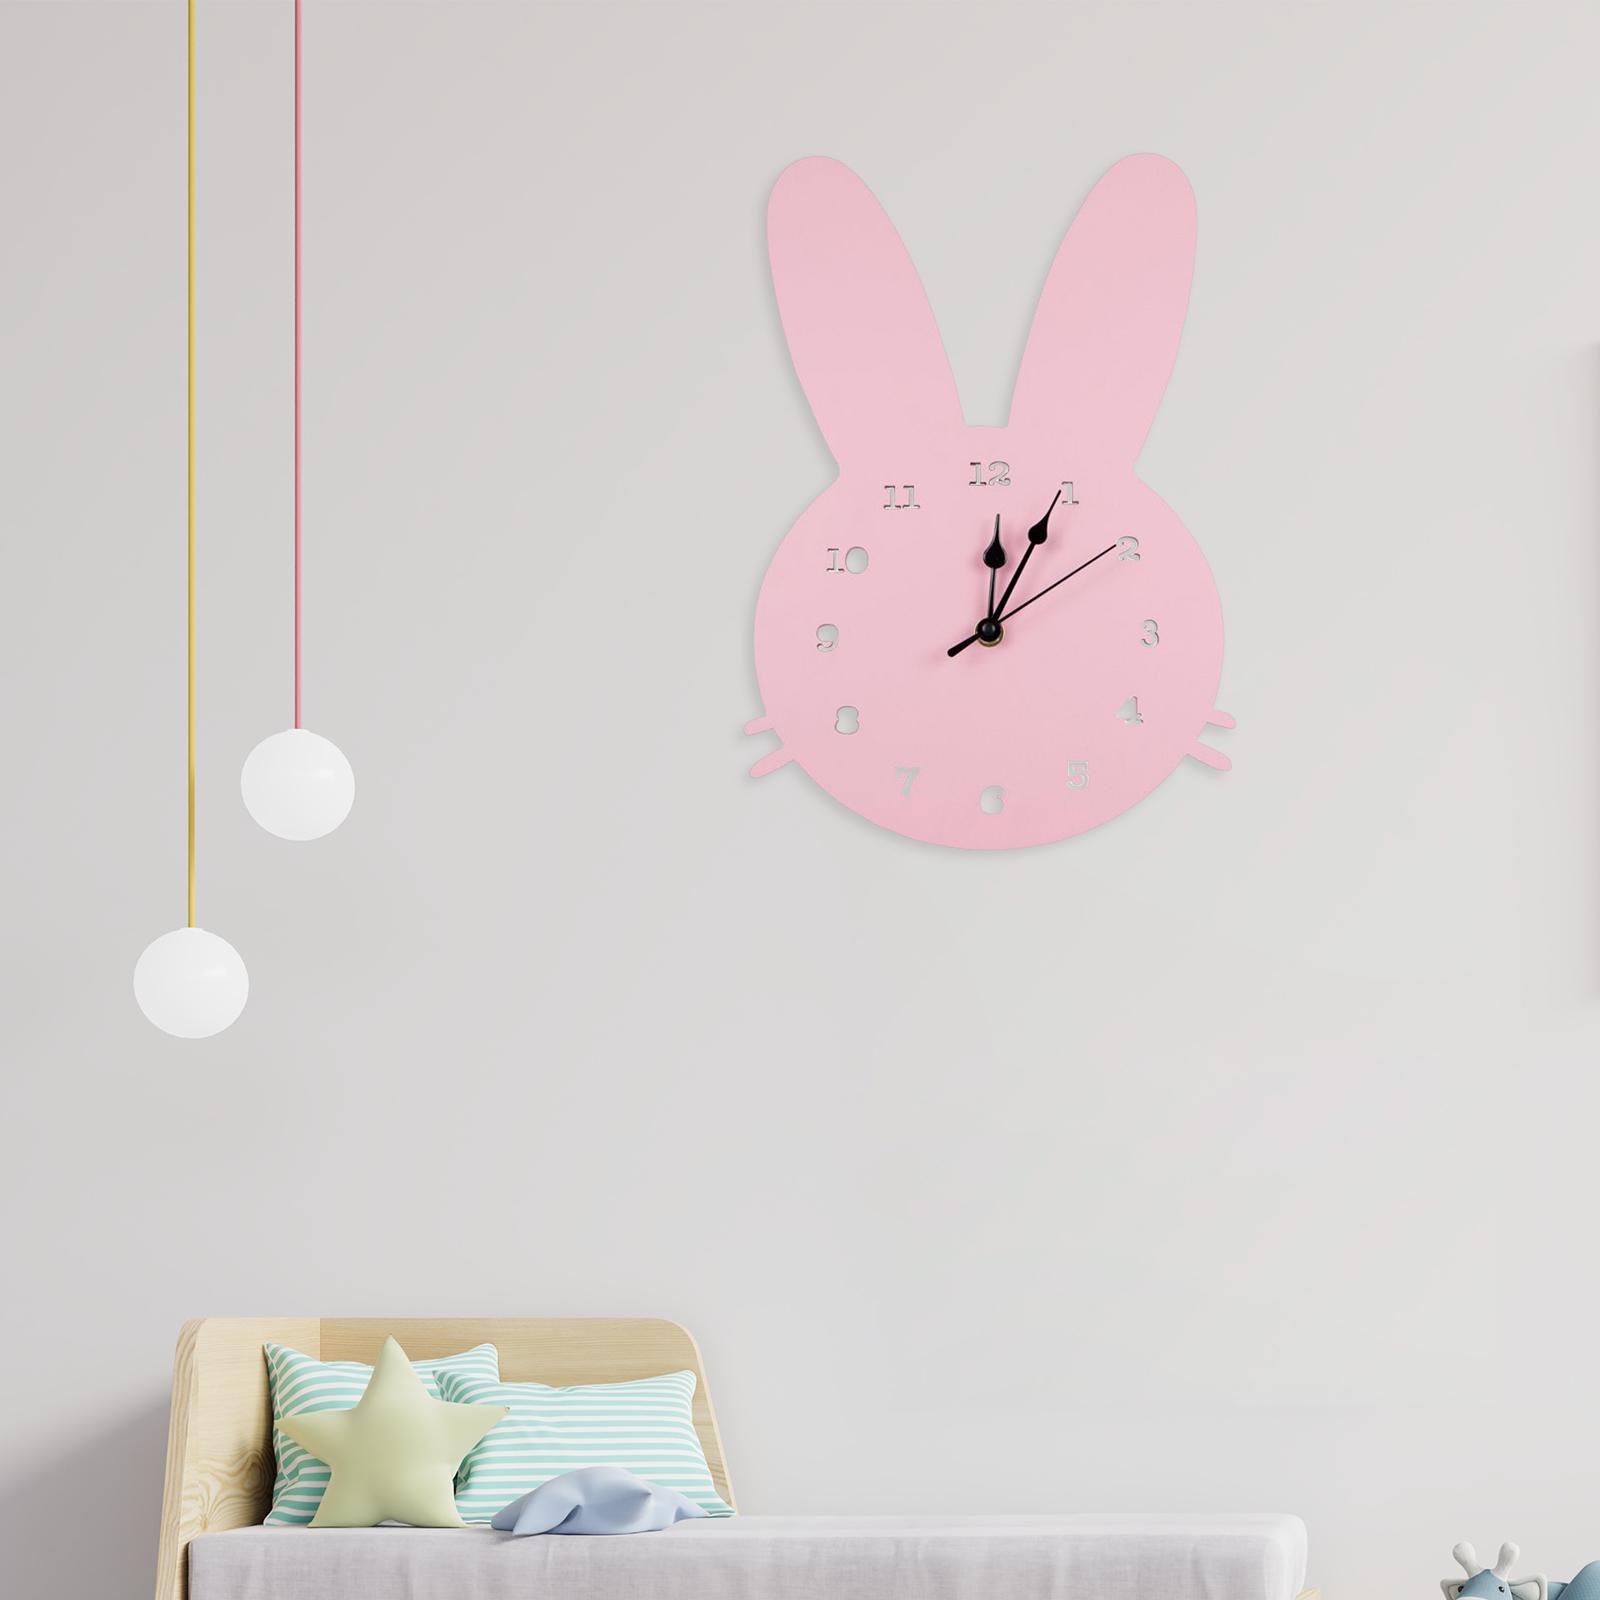 Unfinished Rabbit Wall Clock Bathroom Bedroom Kitchen Hanging Wooden Clocks Pink